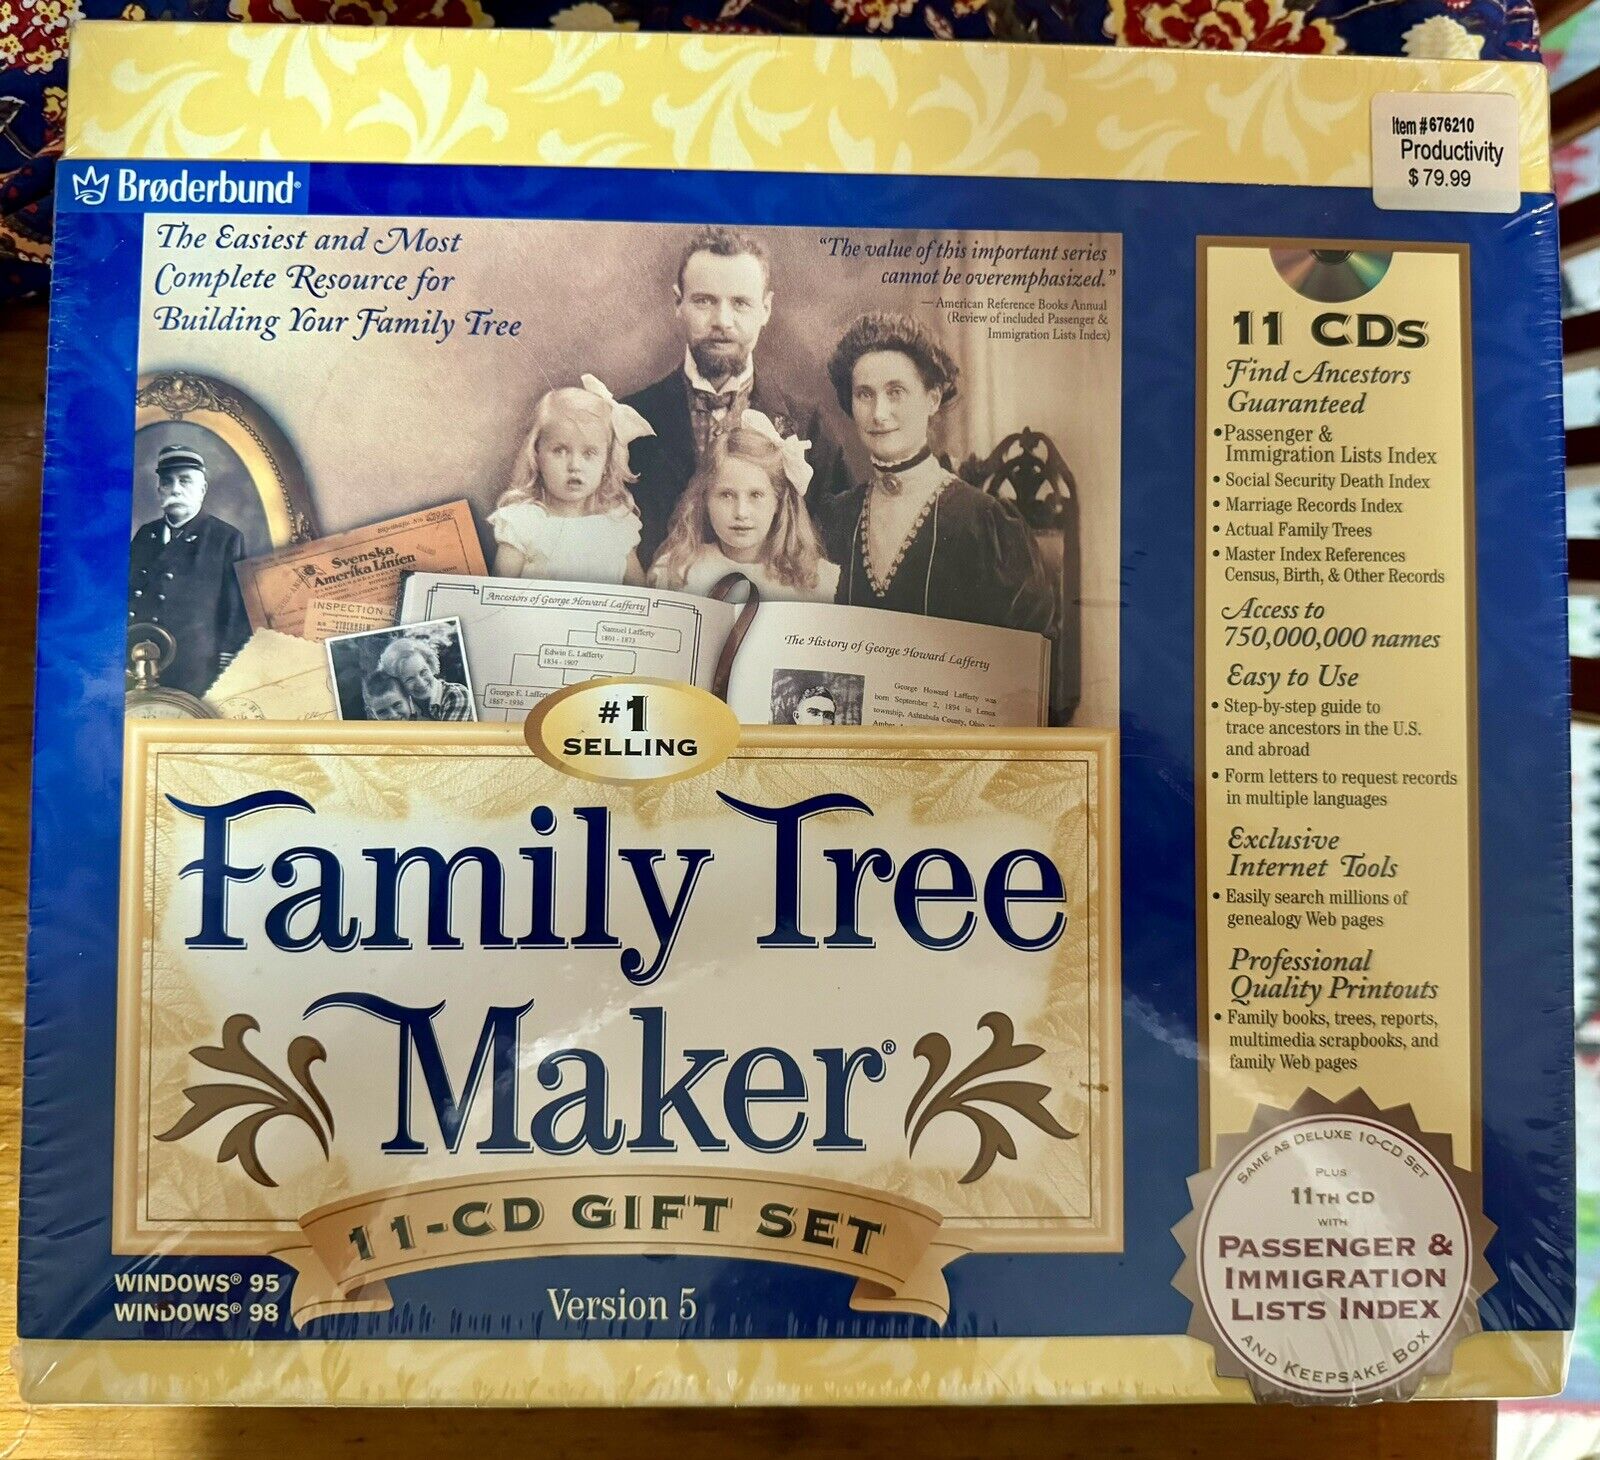 Family Tree Maker Version 5 11-CD Gift Set PC WIN 95/98 Broderbund NEW SEALED